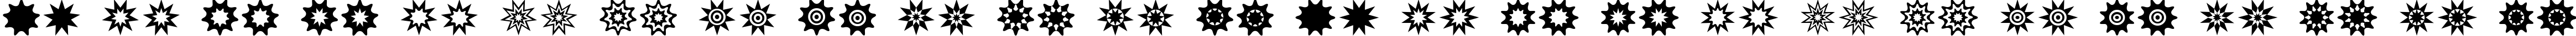 Пример написания английского алфавита шрифтом Star Things 3